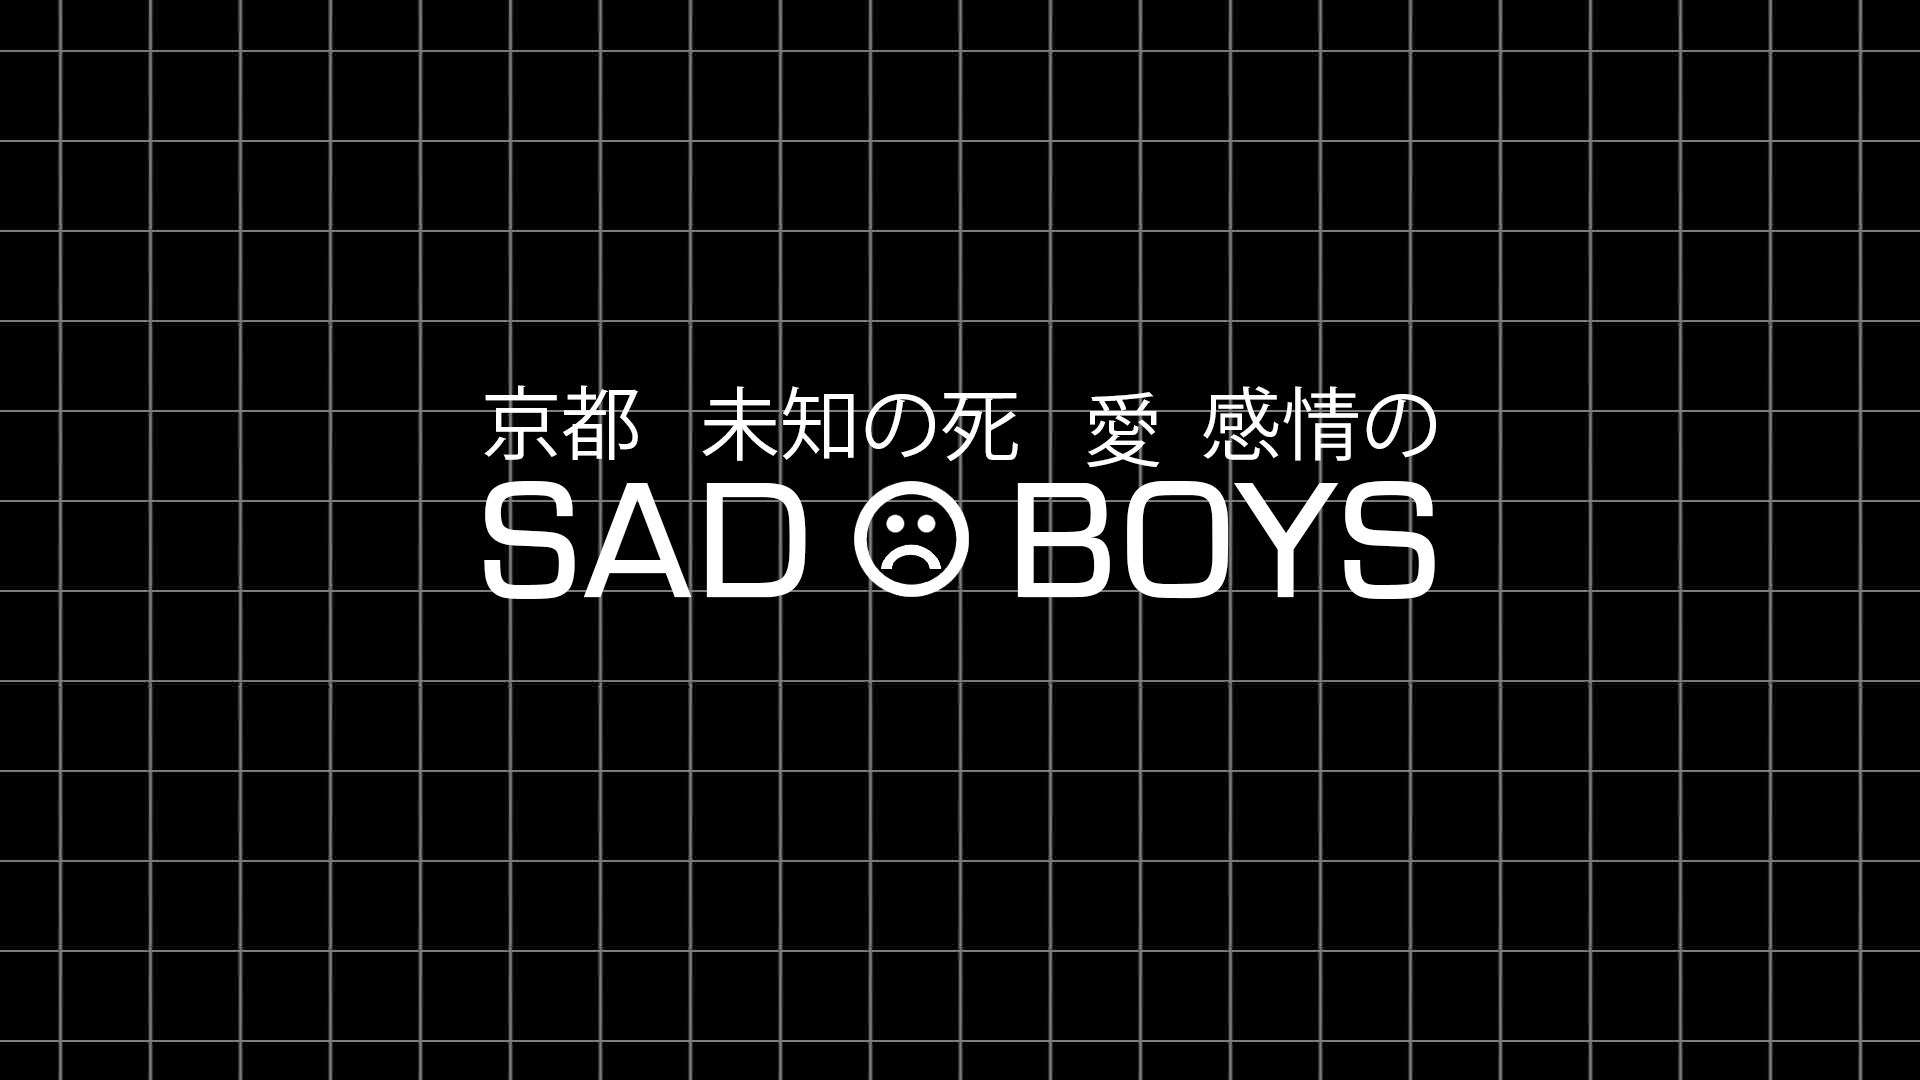 Free Download Sad Boy Wallpaper